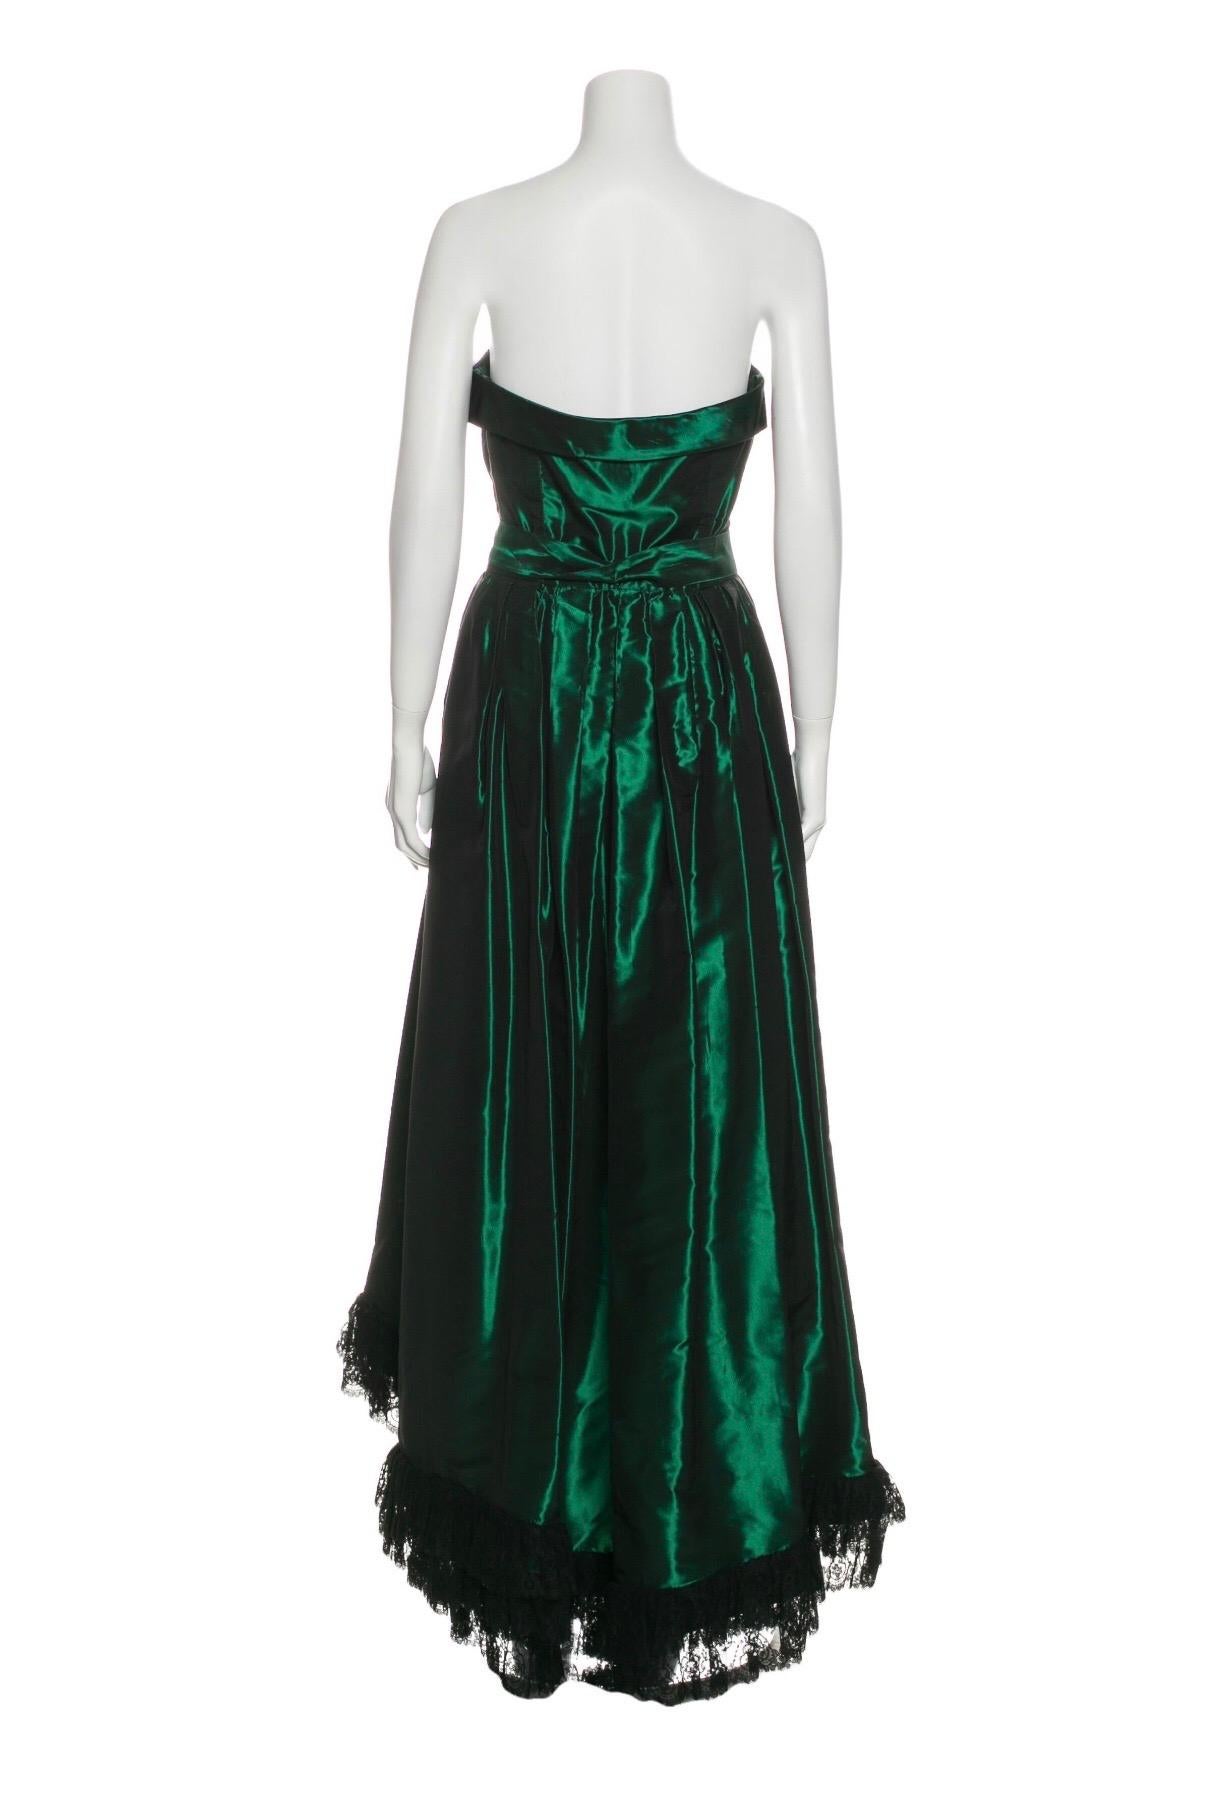 ysl green dress